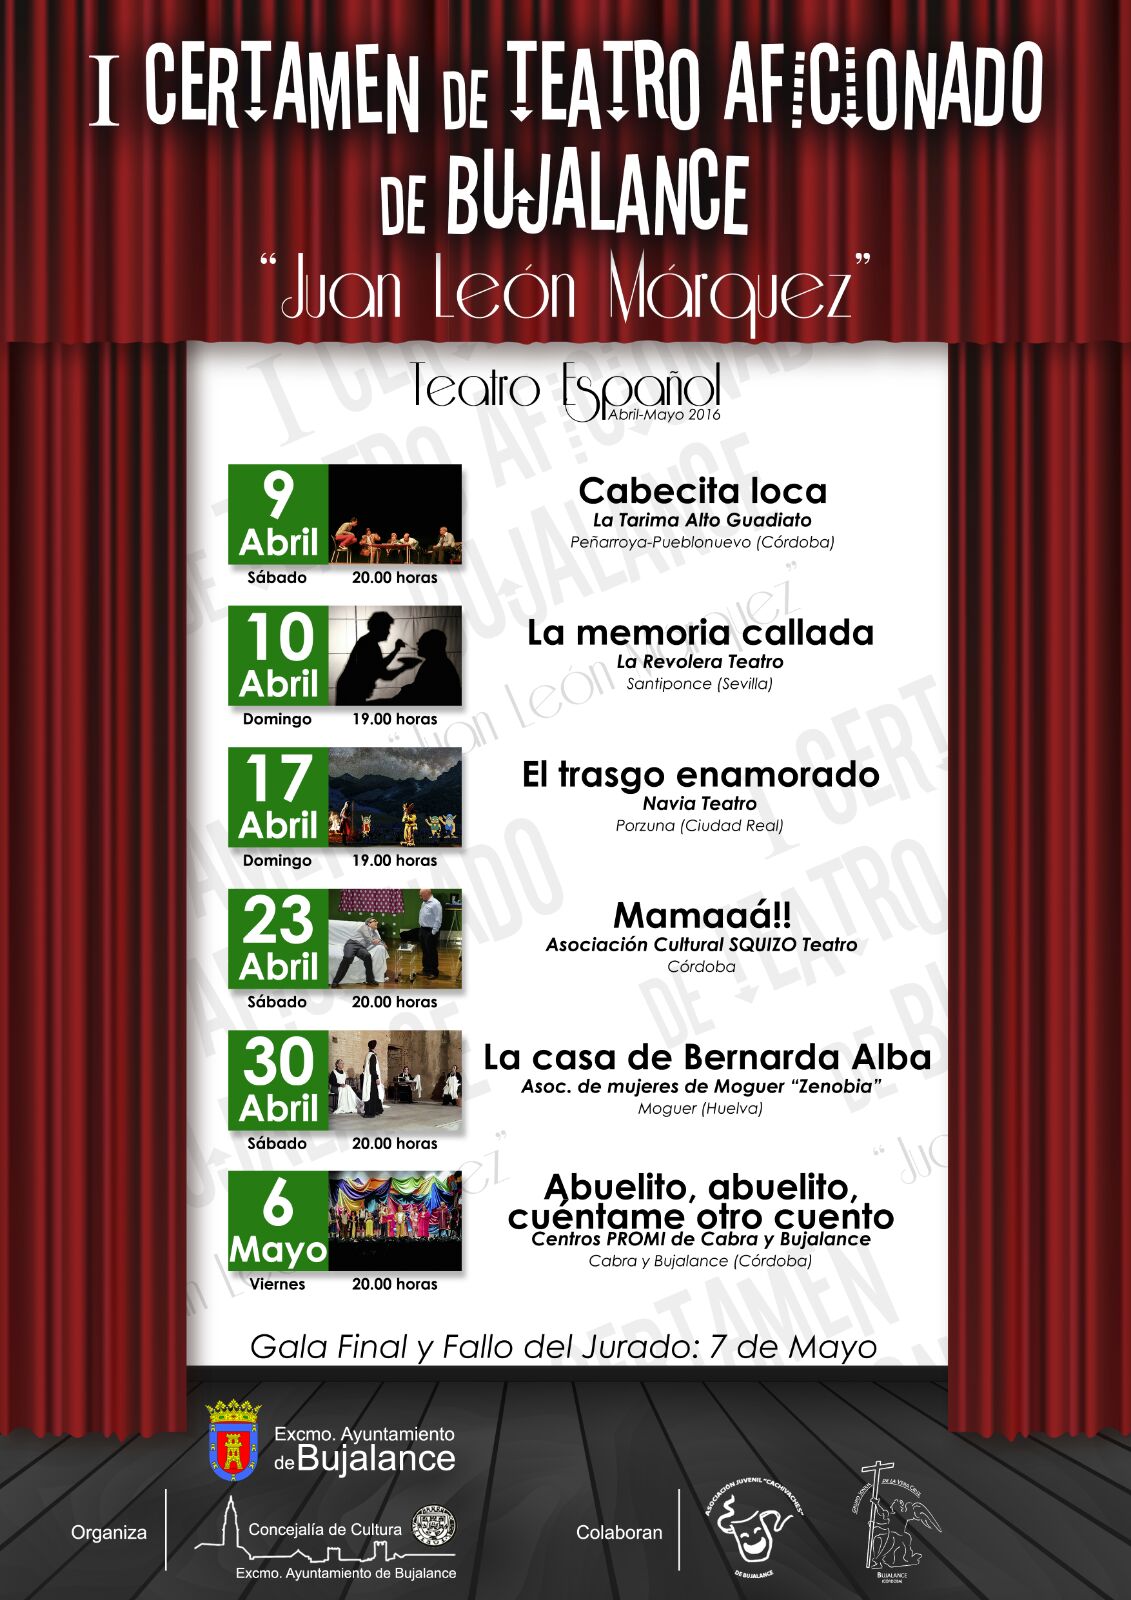 I Certamen de Teatro aficionado de Bujalance "Juan León Márquez"